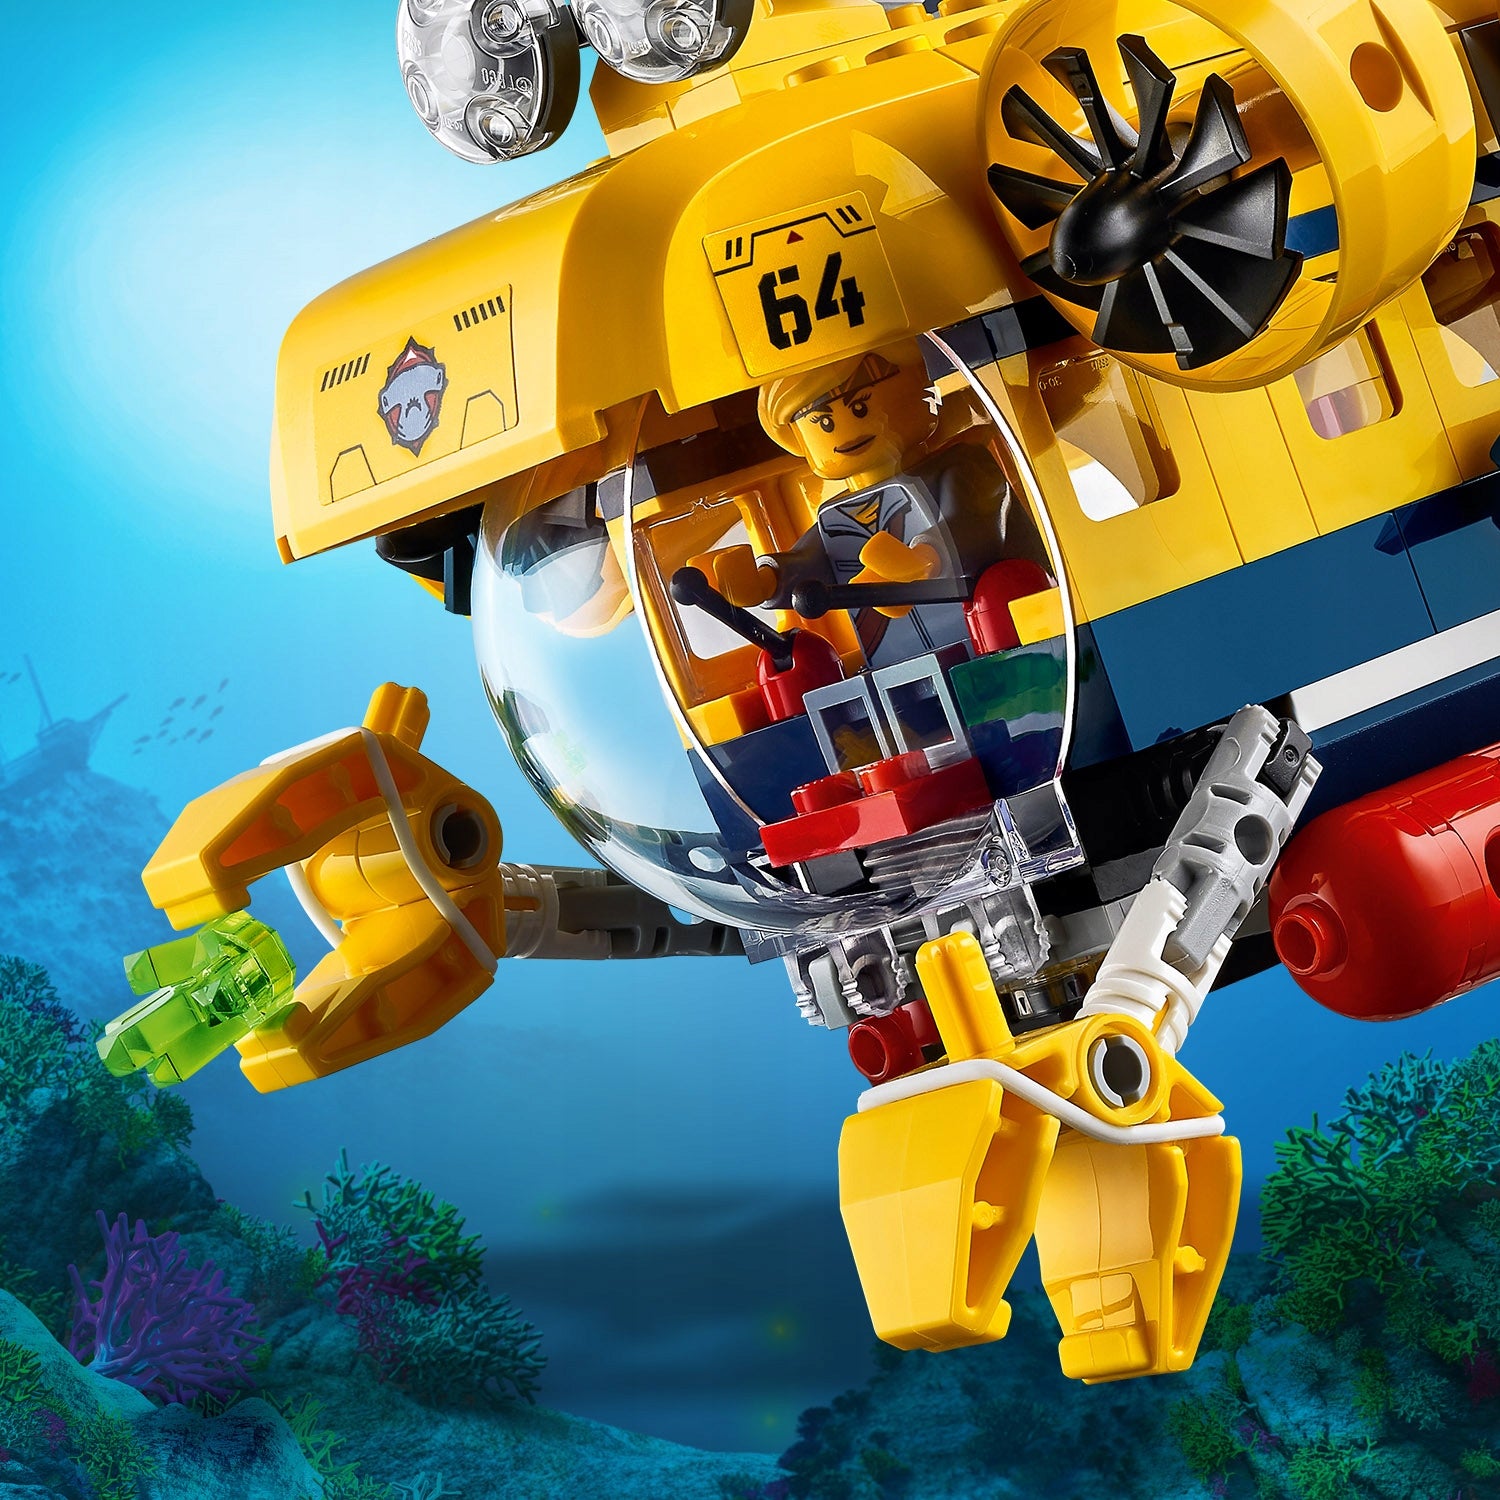 LEGO 60264 City povandeninis laivas